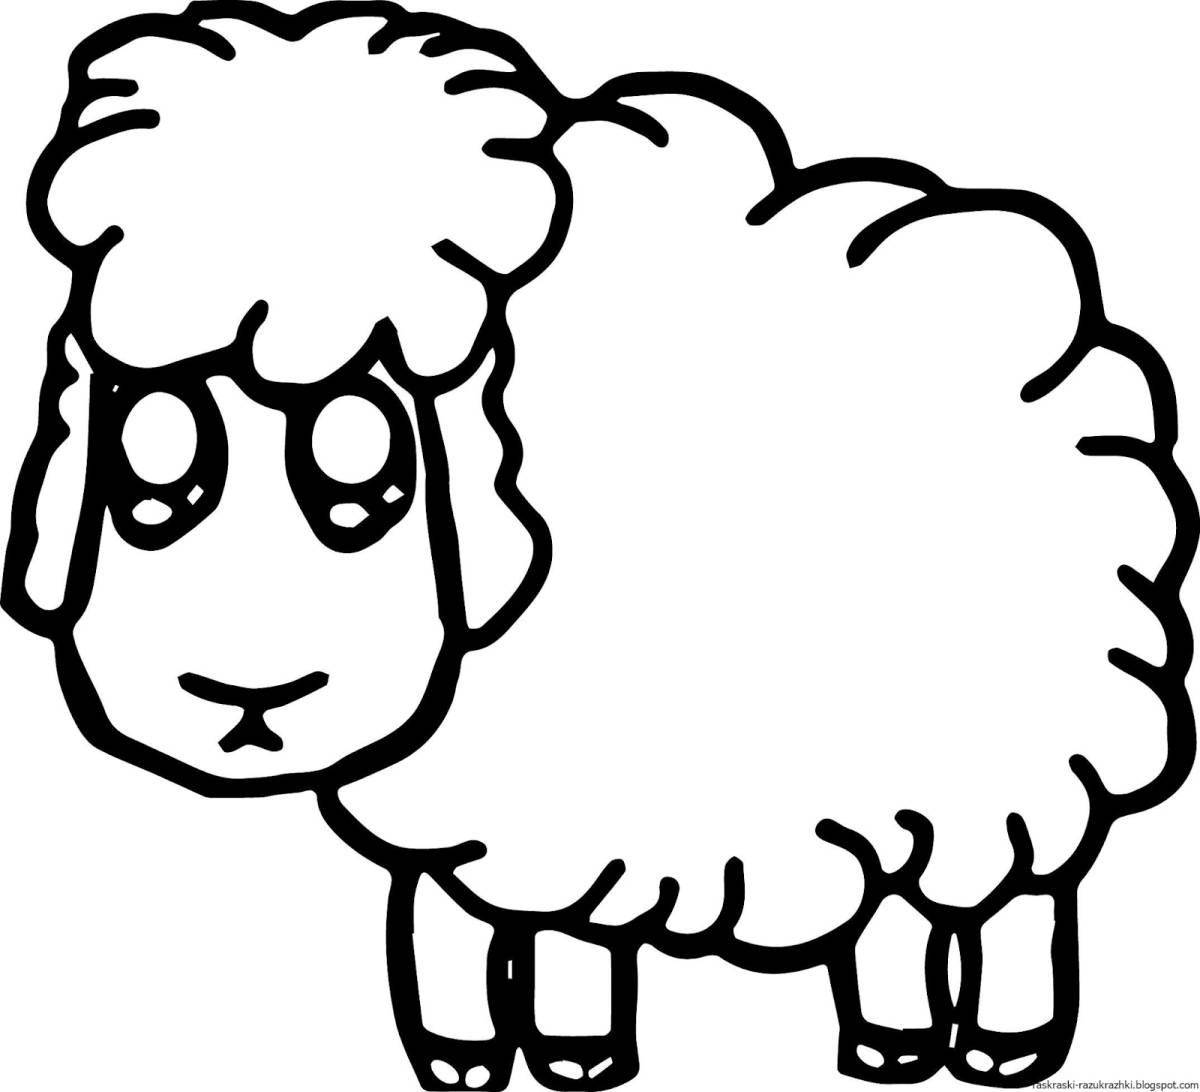 Раскраска sweet sheep для детей 2-3 лет